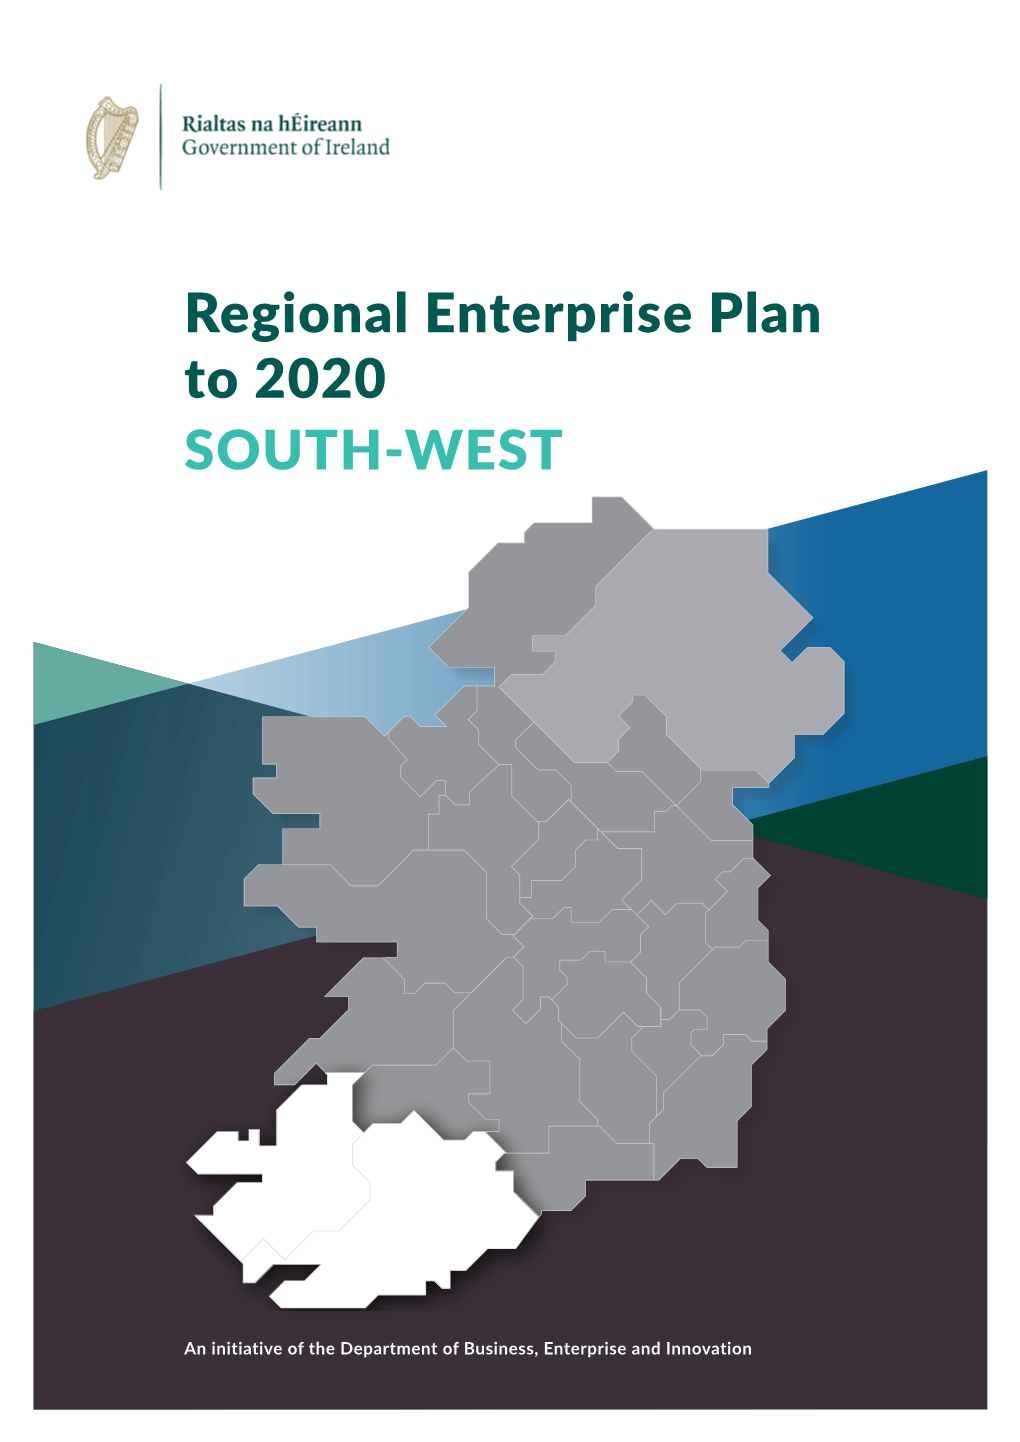 South-West Regional Enterprise Plan to 2020 7